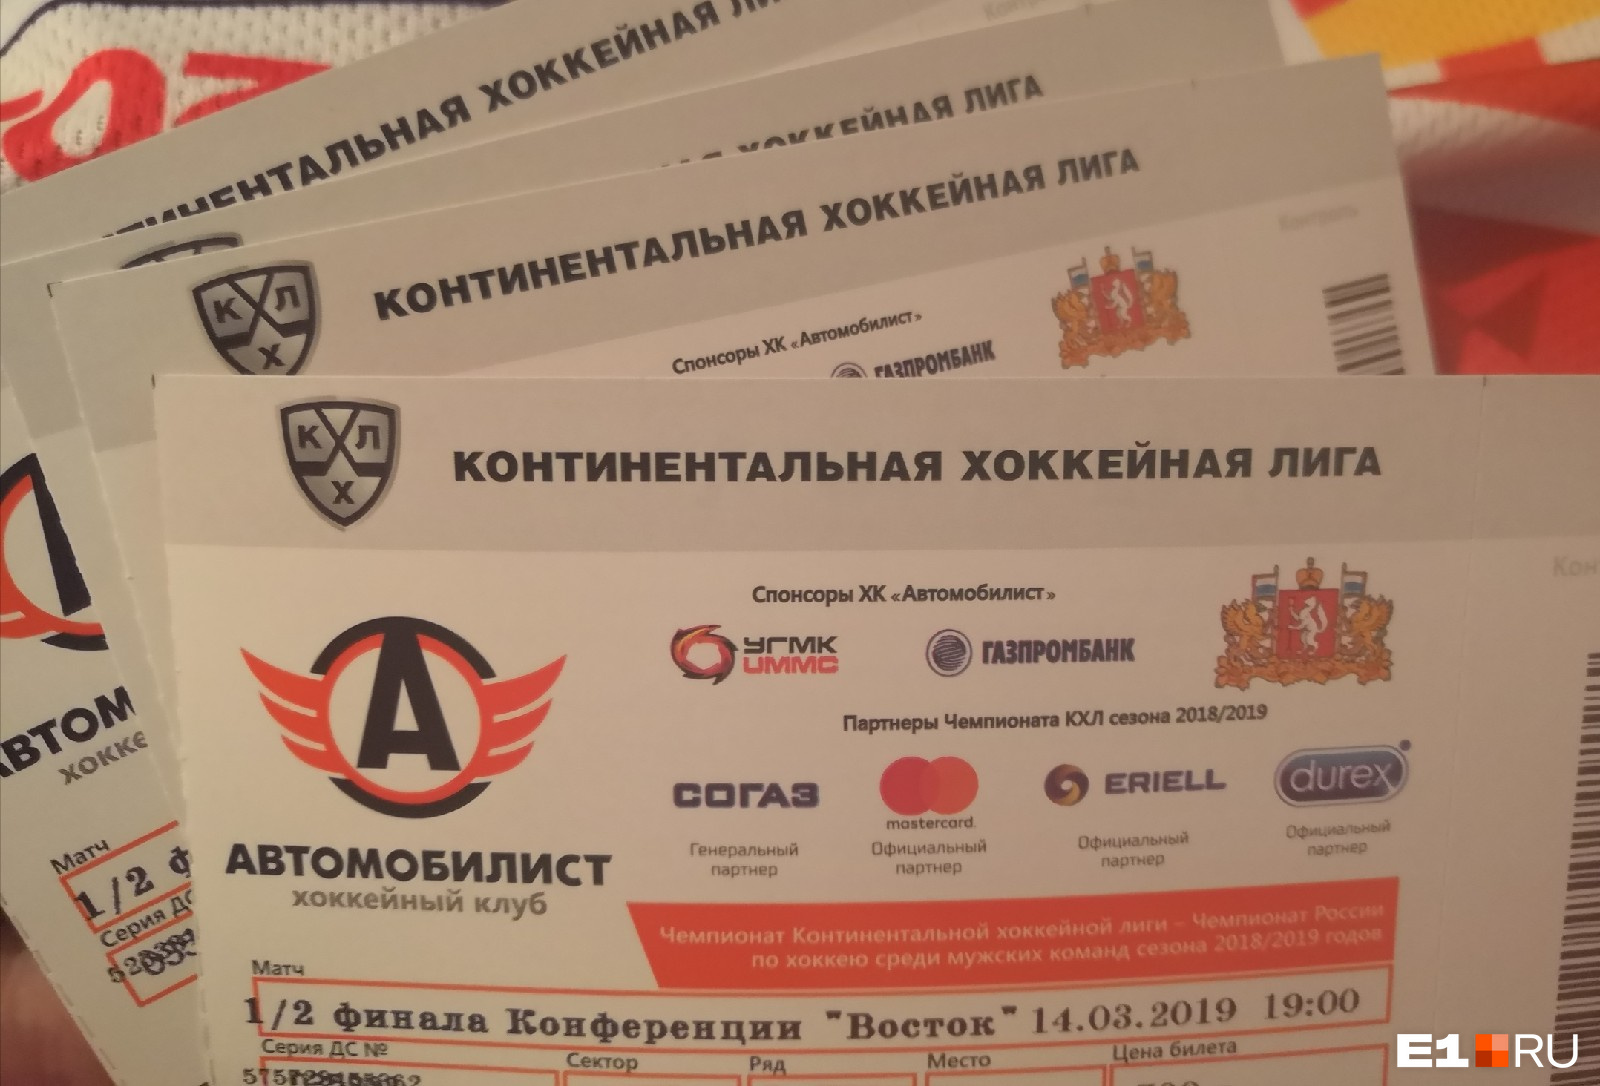 Билет на матч Автомобилист в Екатеринбурге. Билет на хоккей Автомобилист. Билеты хк Автомобилист. Сколько стоят билеты на матч Автомобилист. Автомобилист купить билеты на хоккей екатеринбург крк